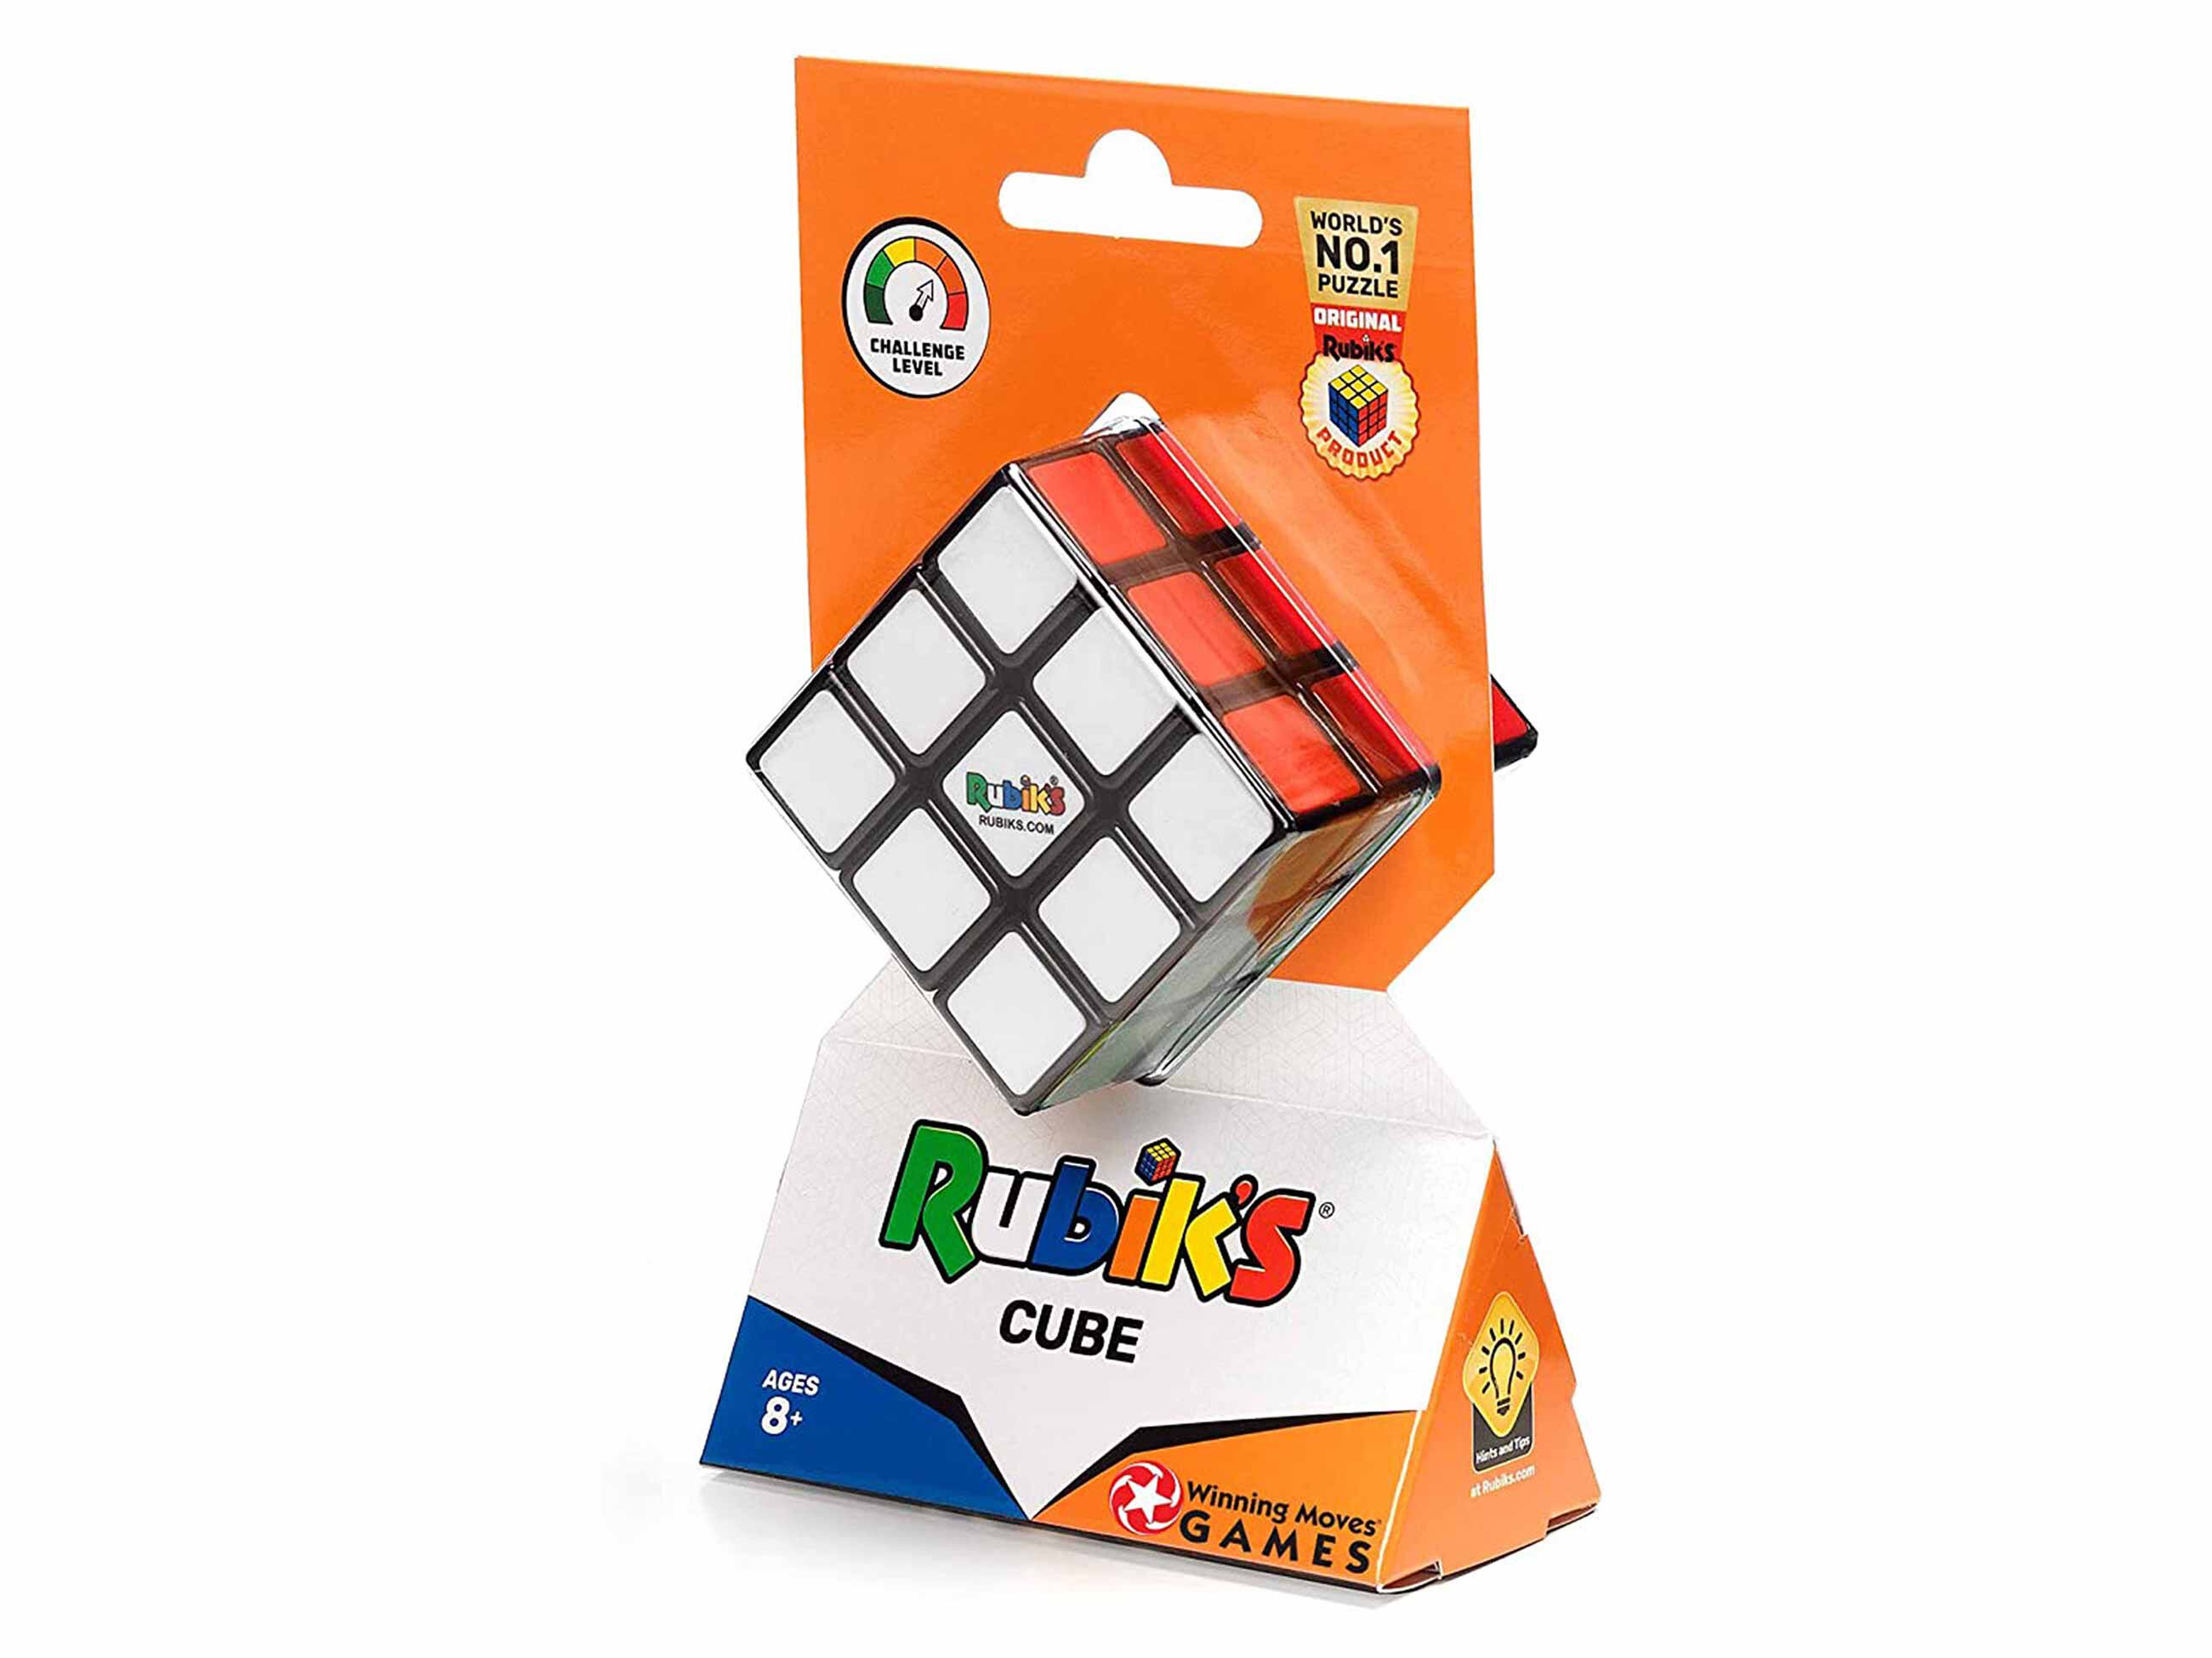 Cubos mágicos especiais. Cubos de Rubik